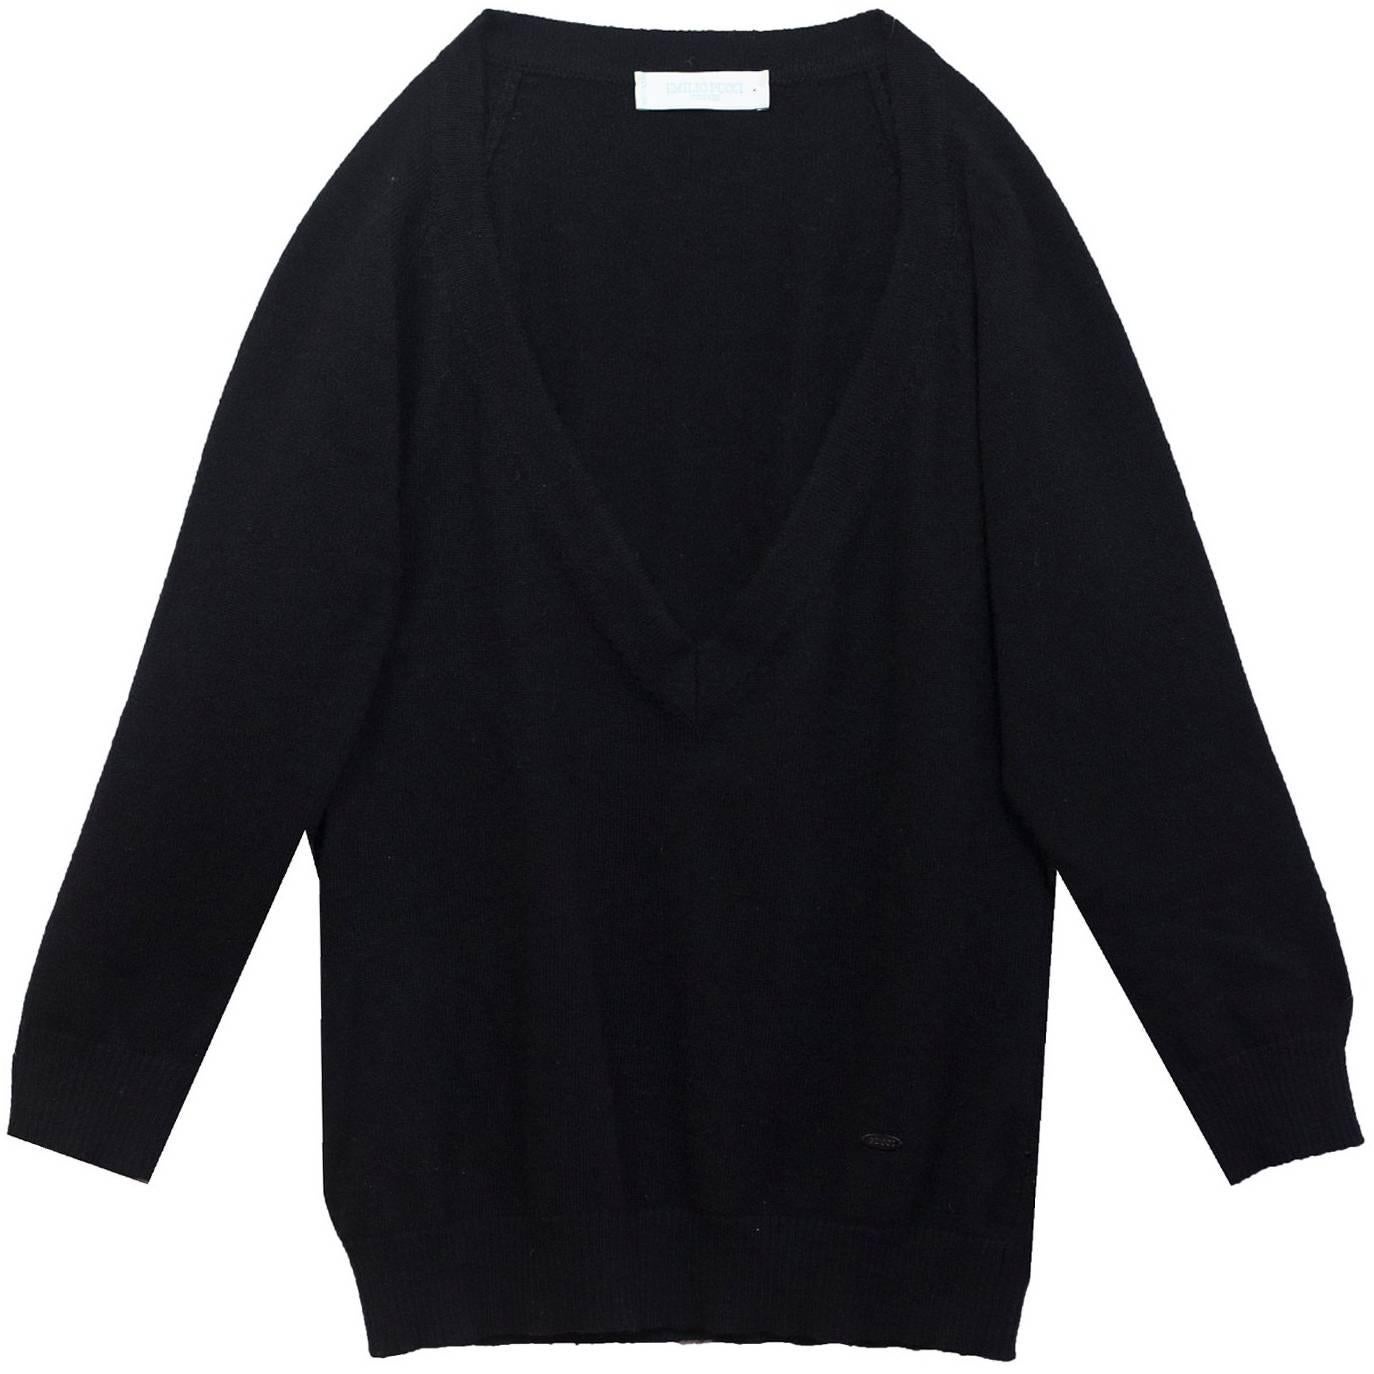 Emilio Pucci Black Cashmere V-Neck Sweater Sz 8